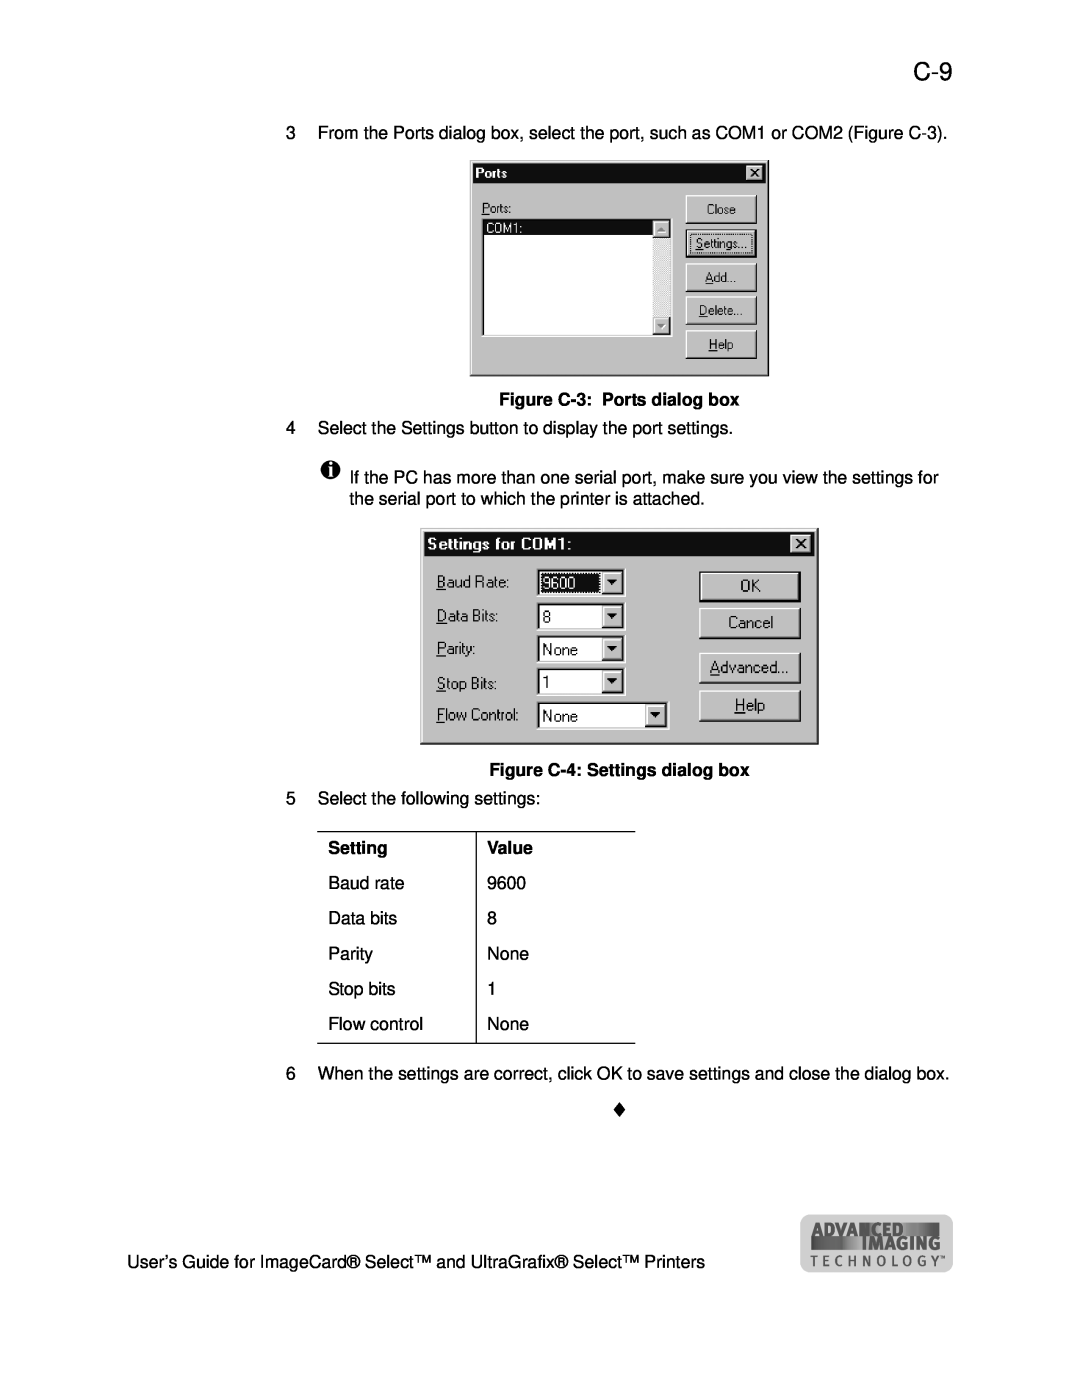 Datacard Group ImageCard SelectTM and UltraGrafix SelectTM Printers manual Figure C-3 Ports dialog box, Setting, Value 